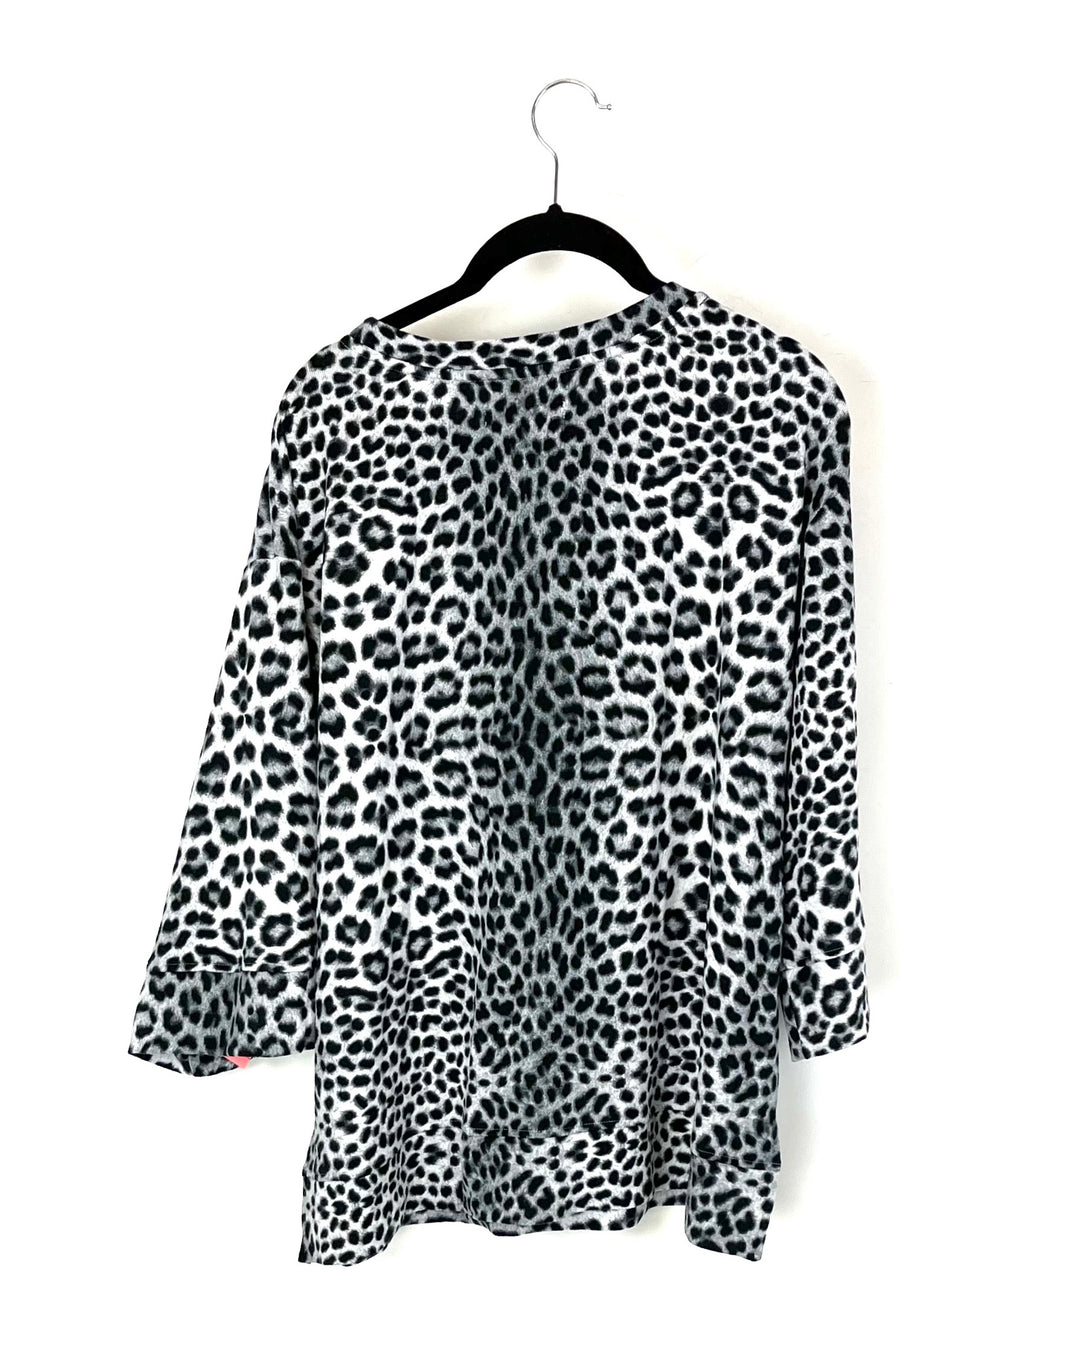 Black And White Cheetah Print Sleepwear Set - Small